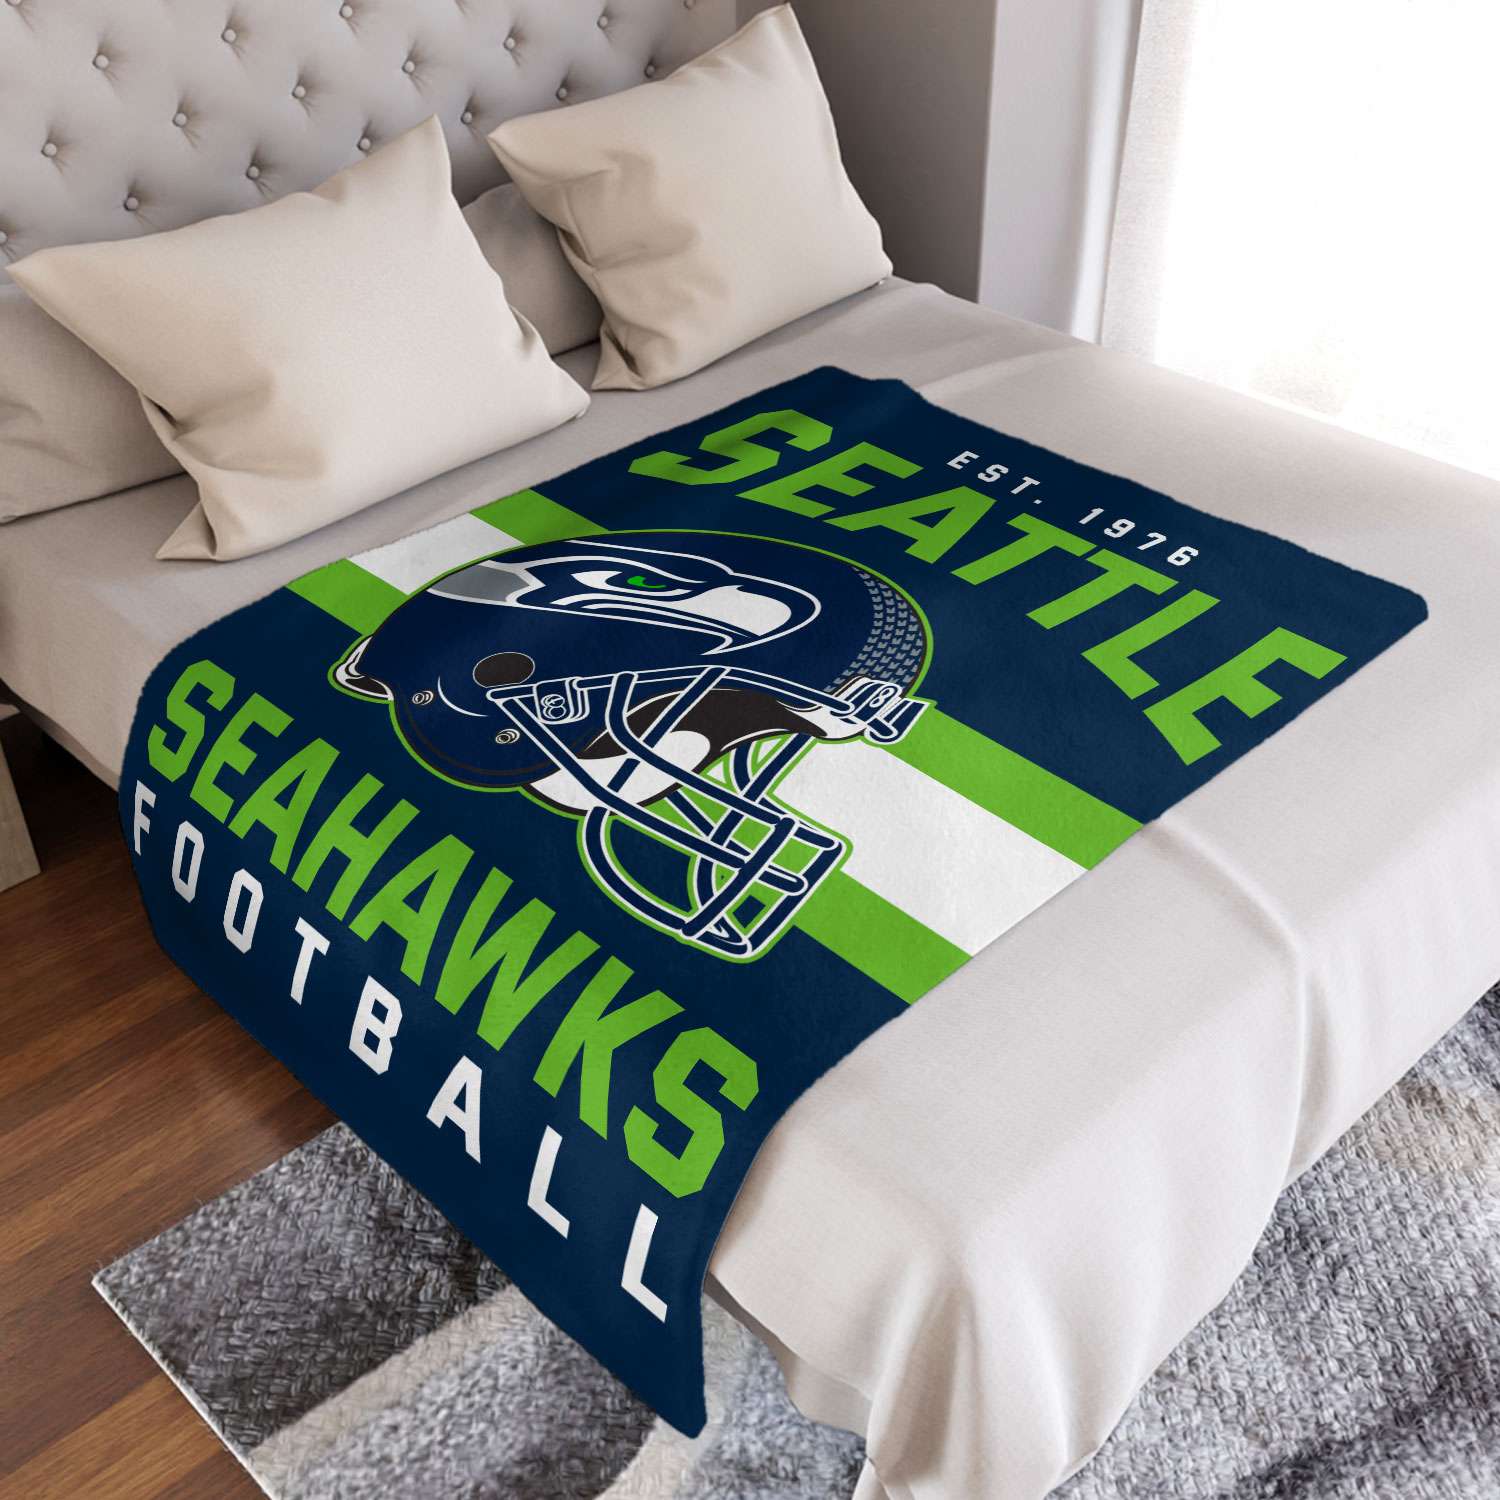 seahawks bedding